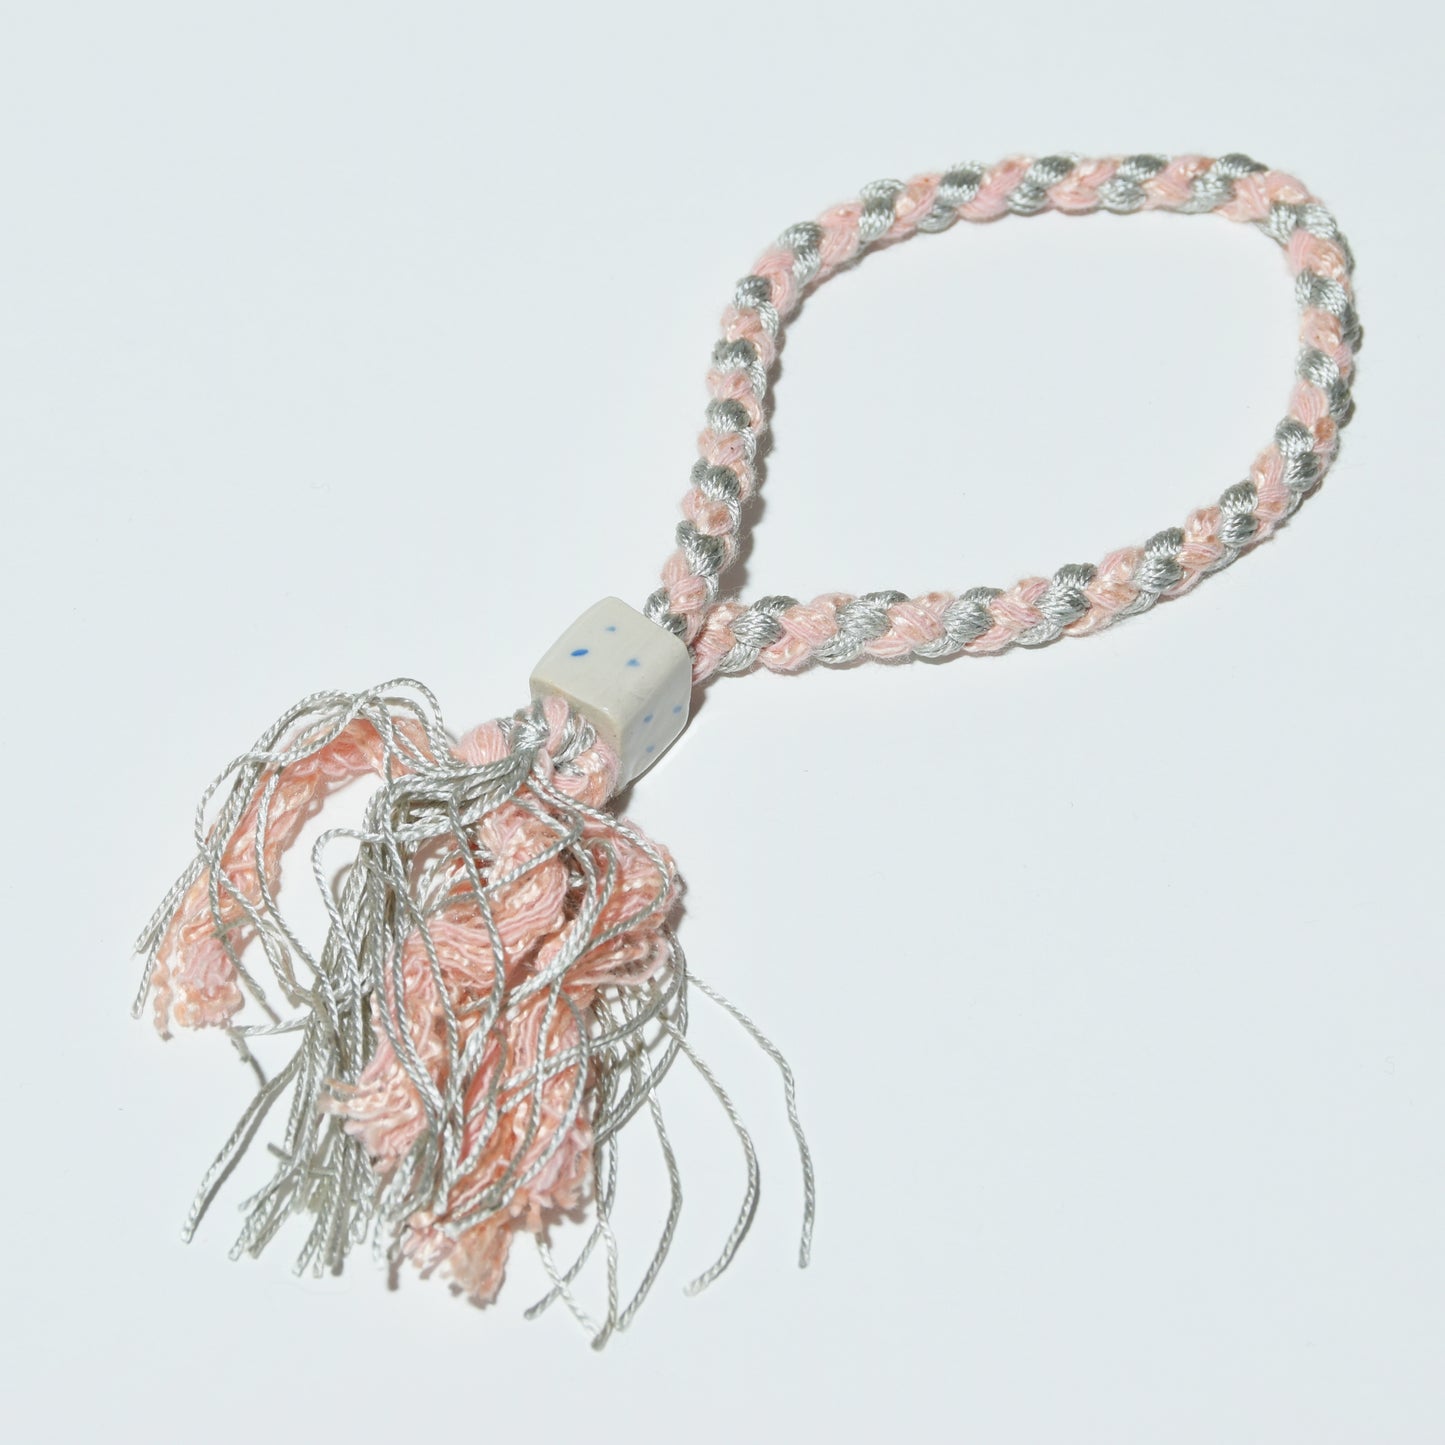 Ainu 'Emushiatsu Weave' Strap Silk Thread